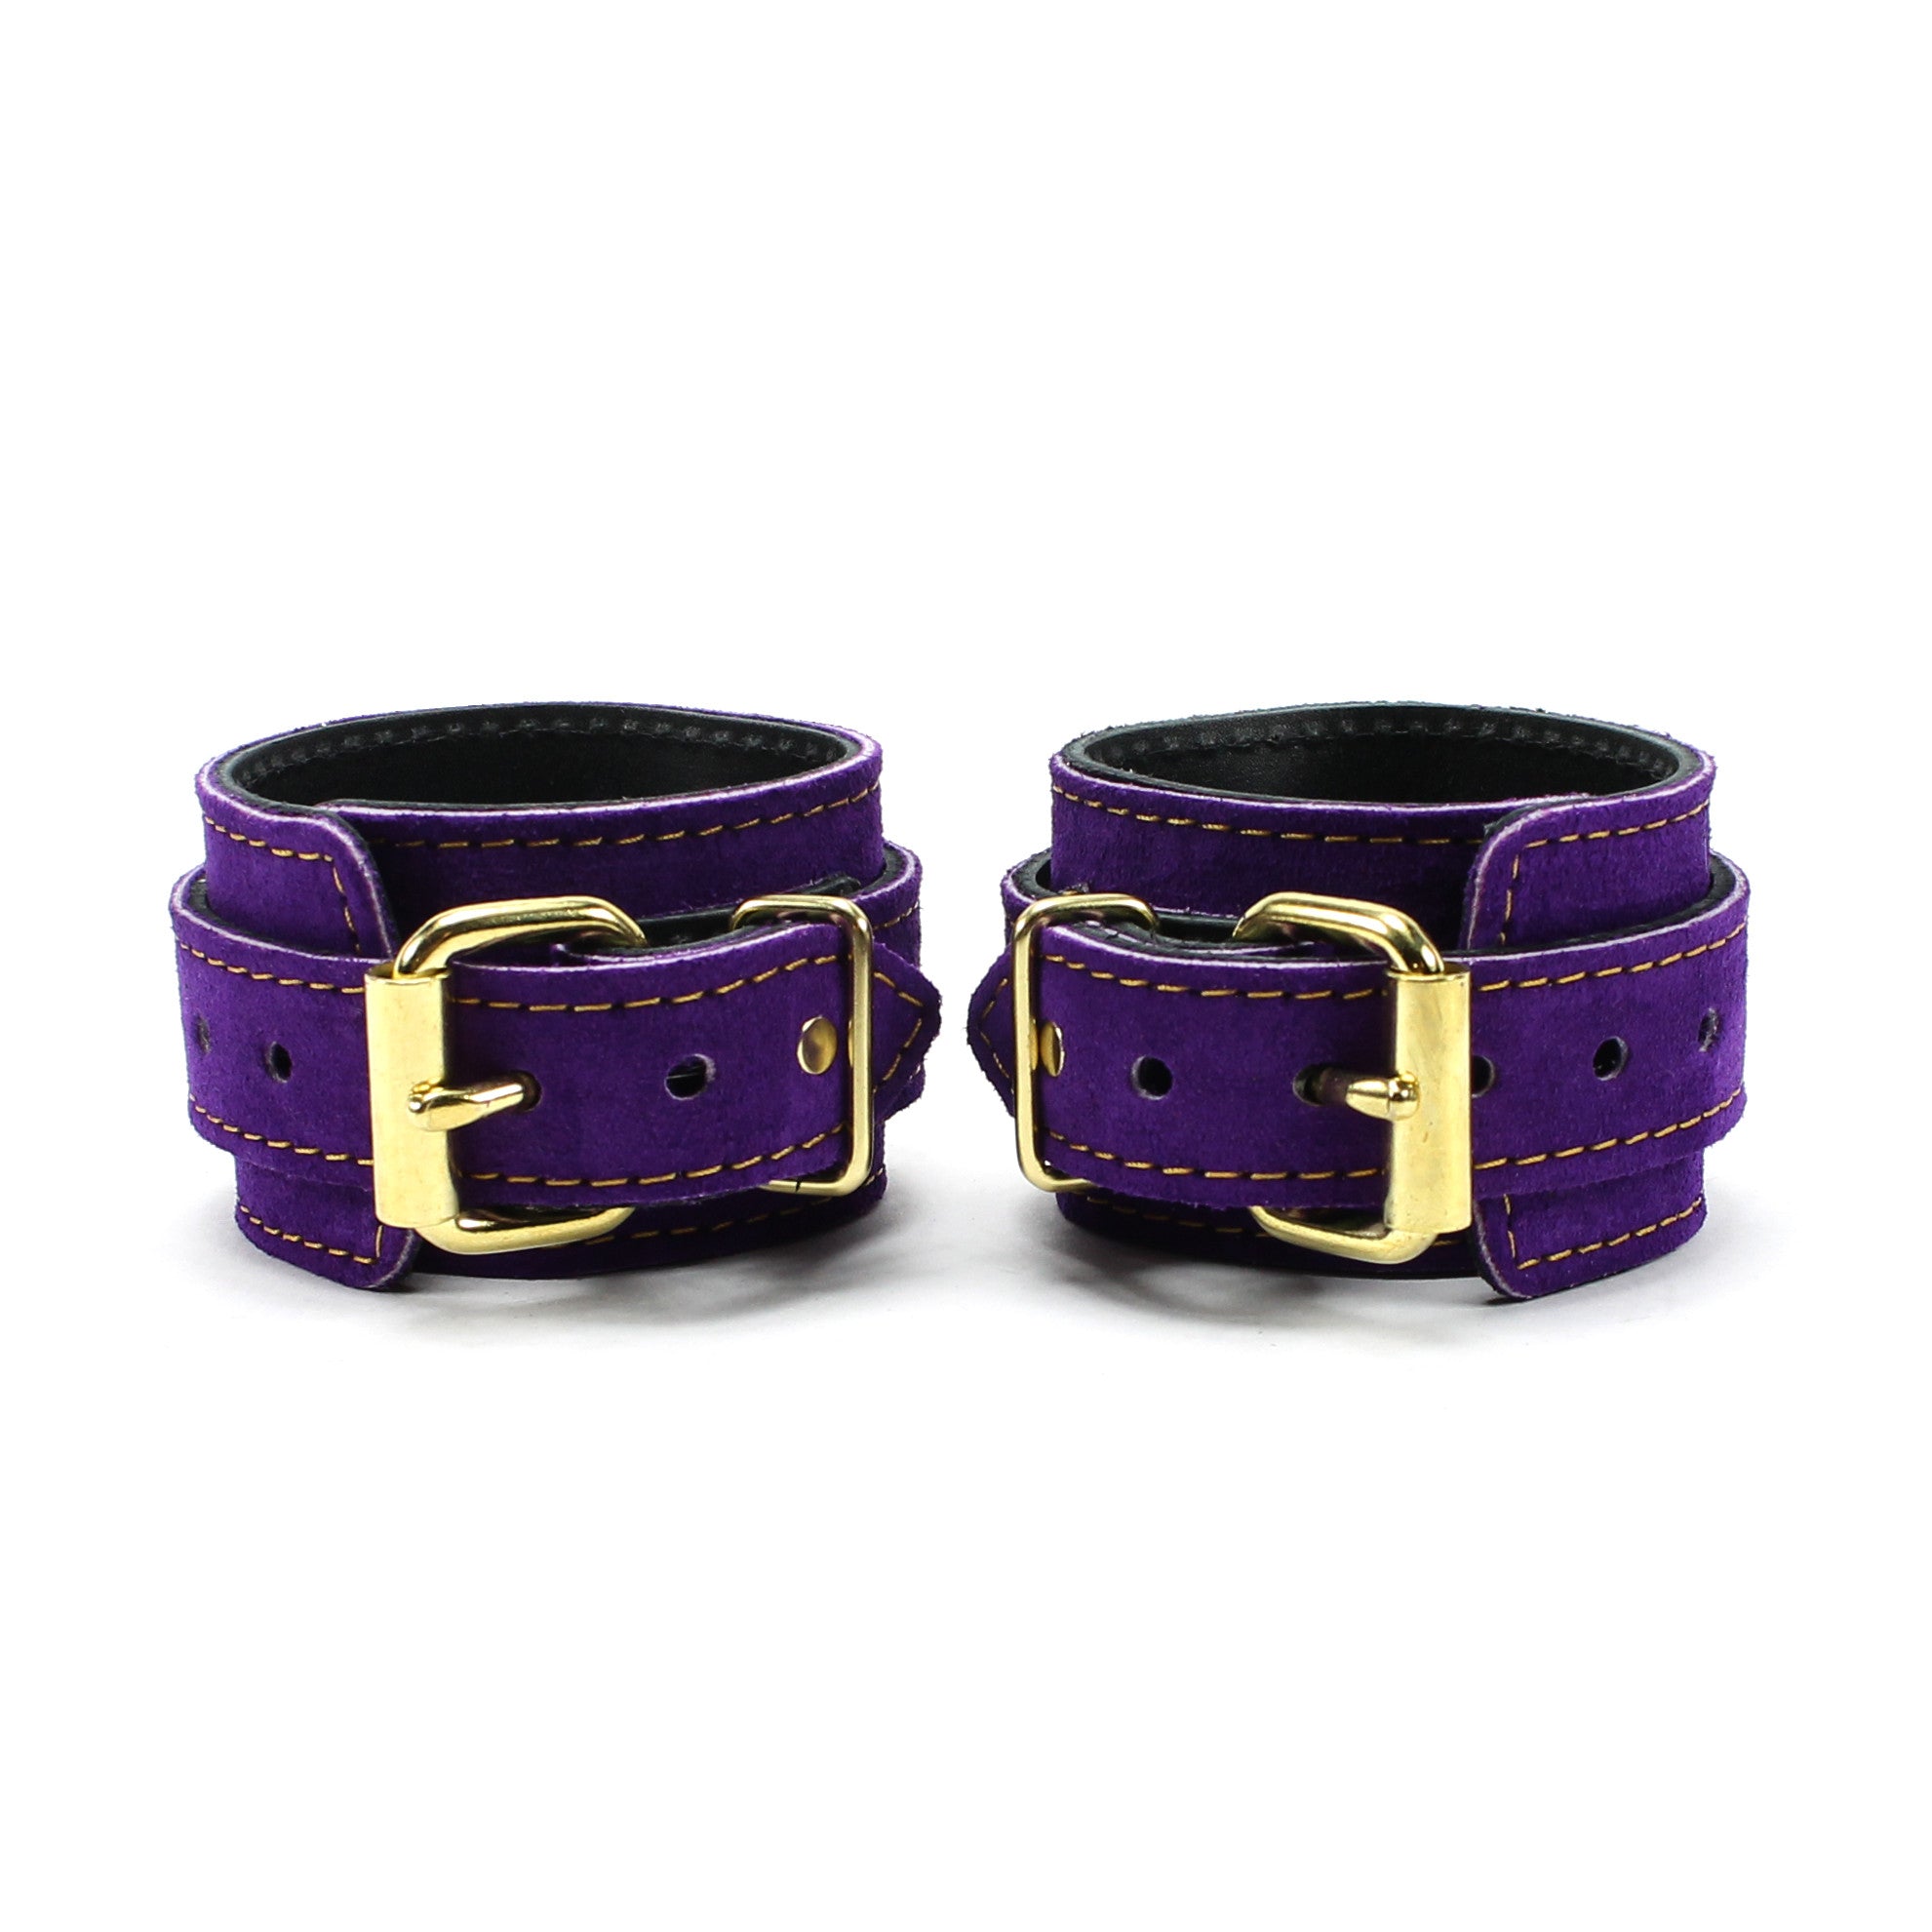 Athena Special Edition Purple Suede BDSM Cuffs